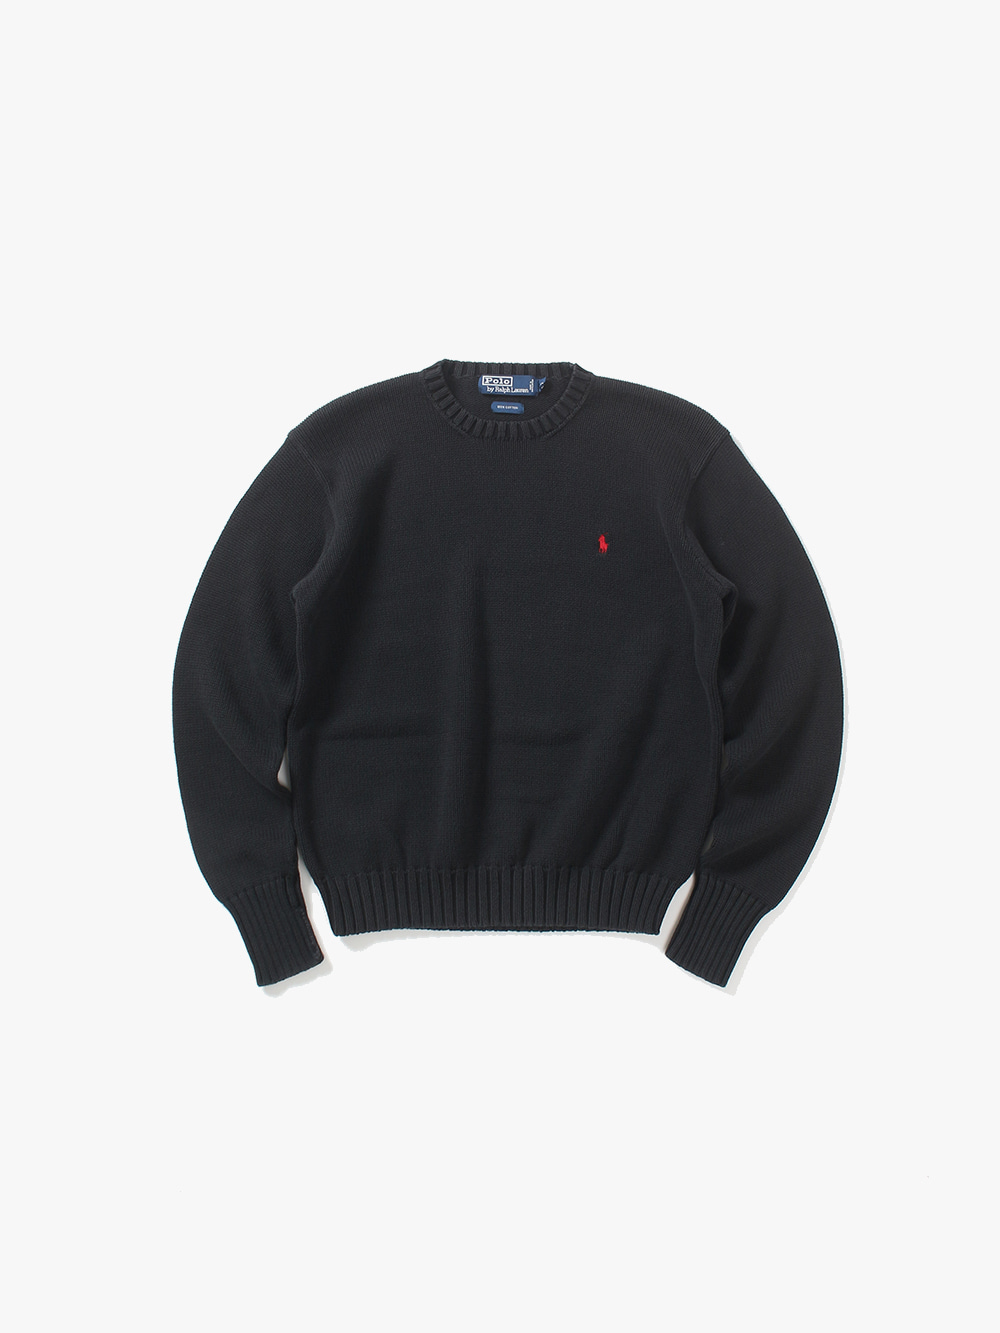 [ S ] Polo Ralph Lauren Sweater (6289)